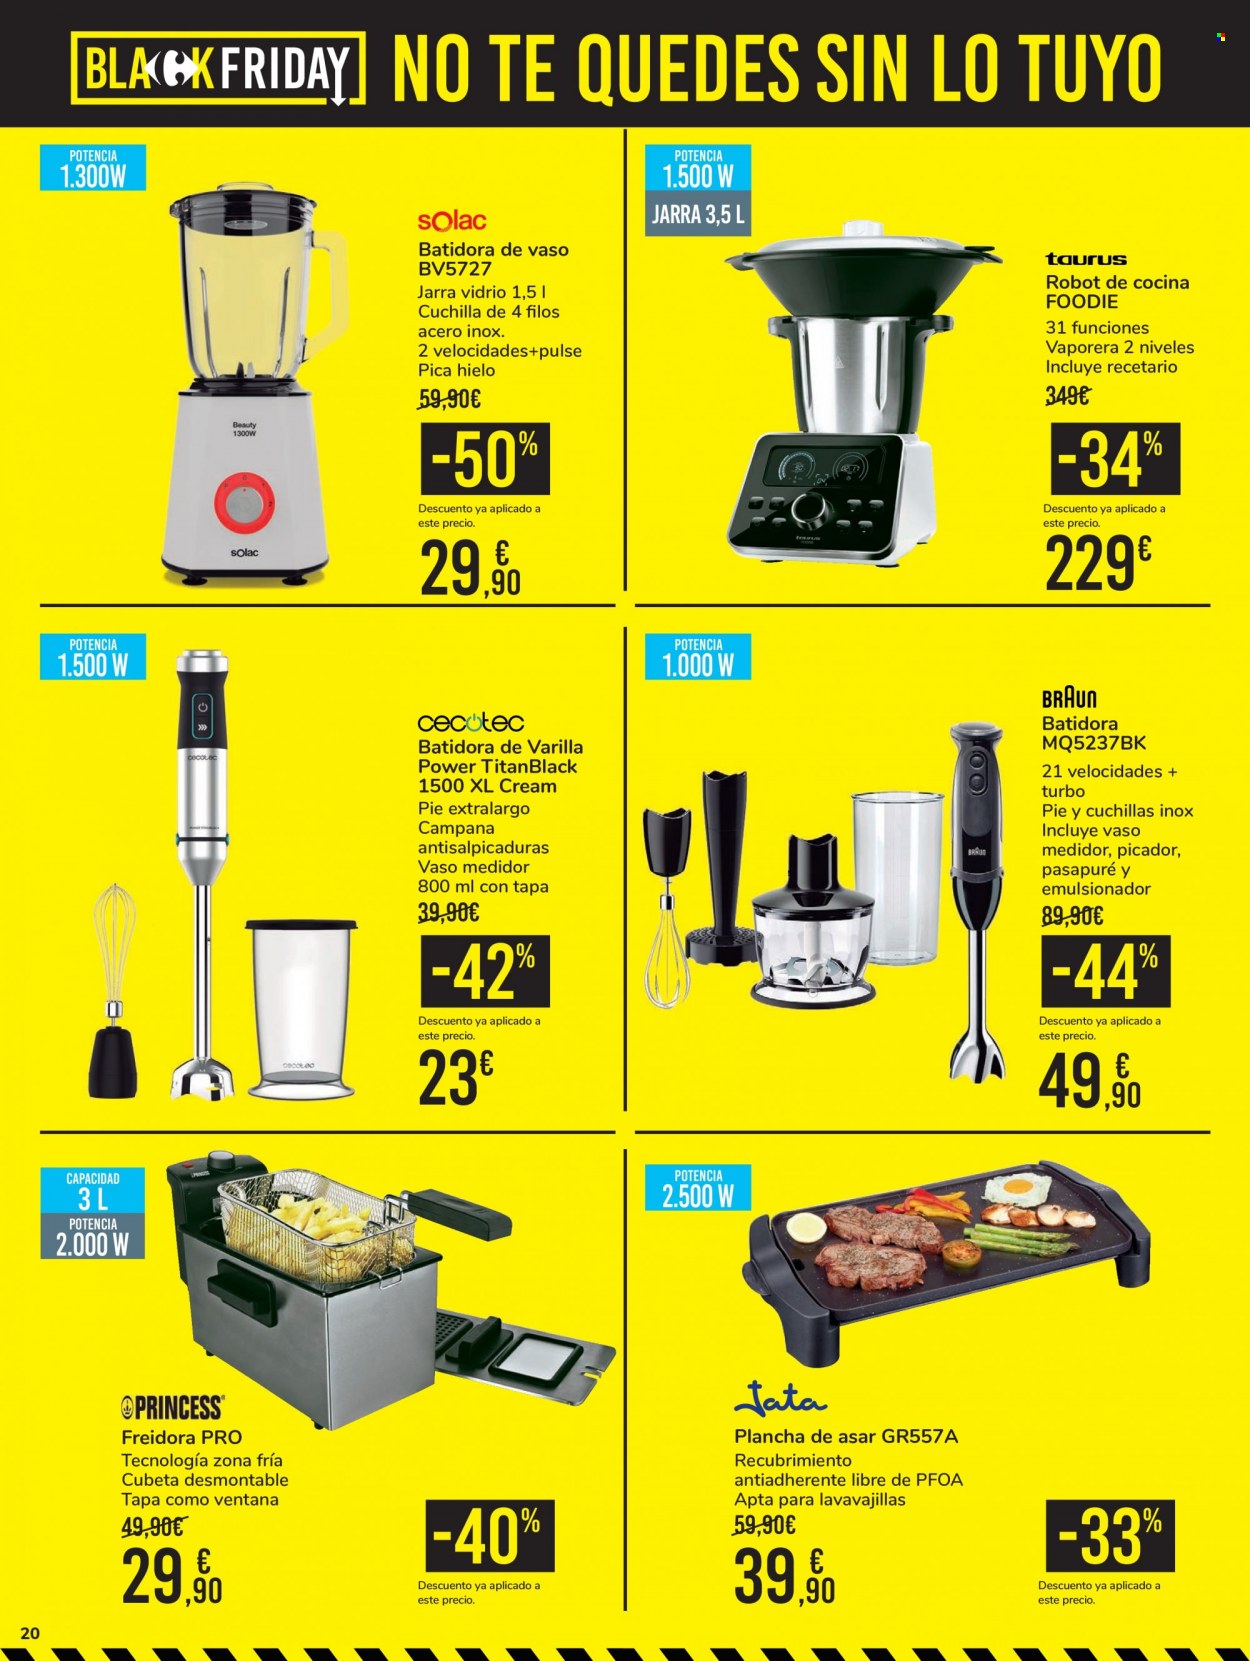 thumbnail - Folleto actual Carrefour - 22/11/21 - 28/11/21 - Ventas - jarra, robot, Braun, Taurus, batidora, batidora de vaso, freidora, robot de cocina, plancha. Página 20.